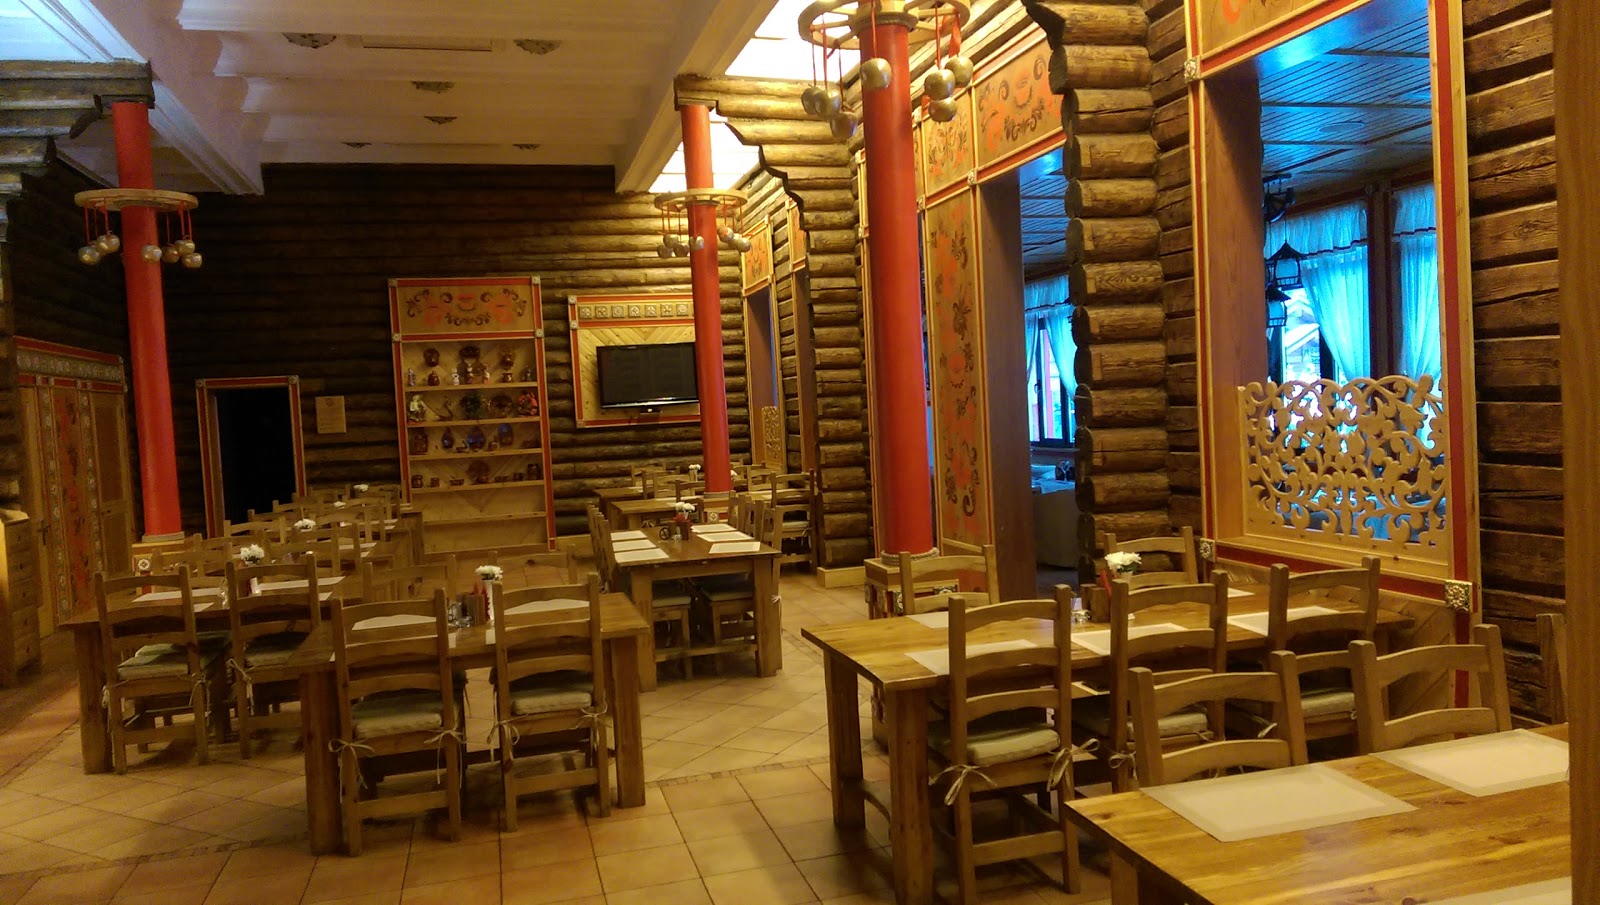 Restoran "Klyukva"